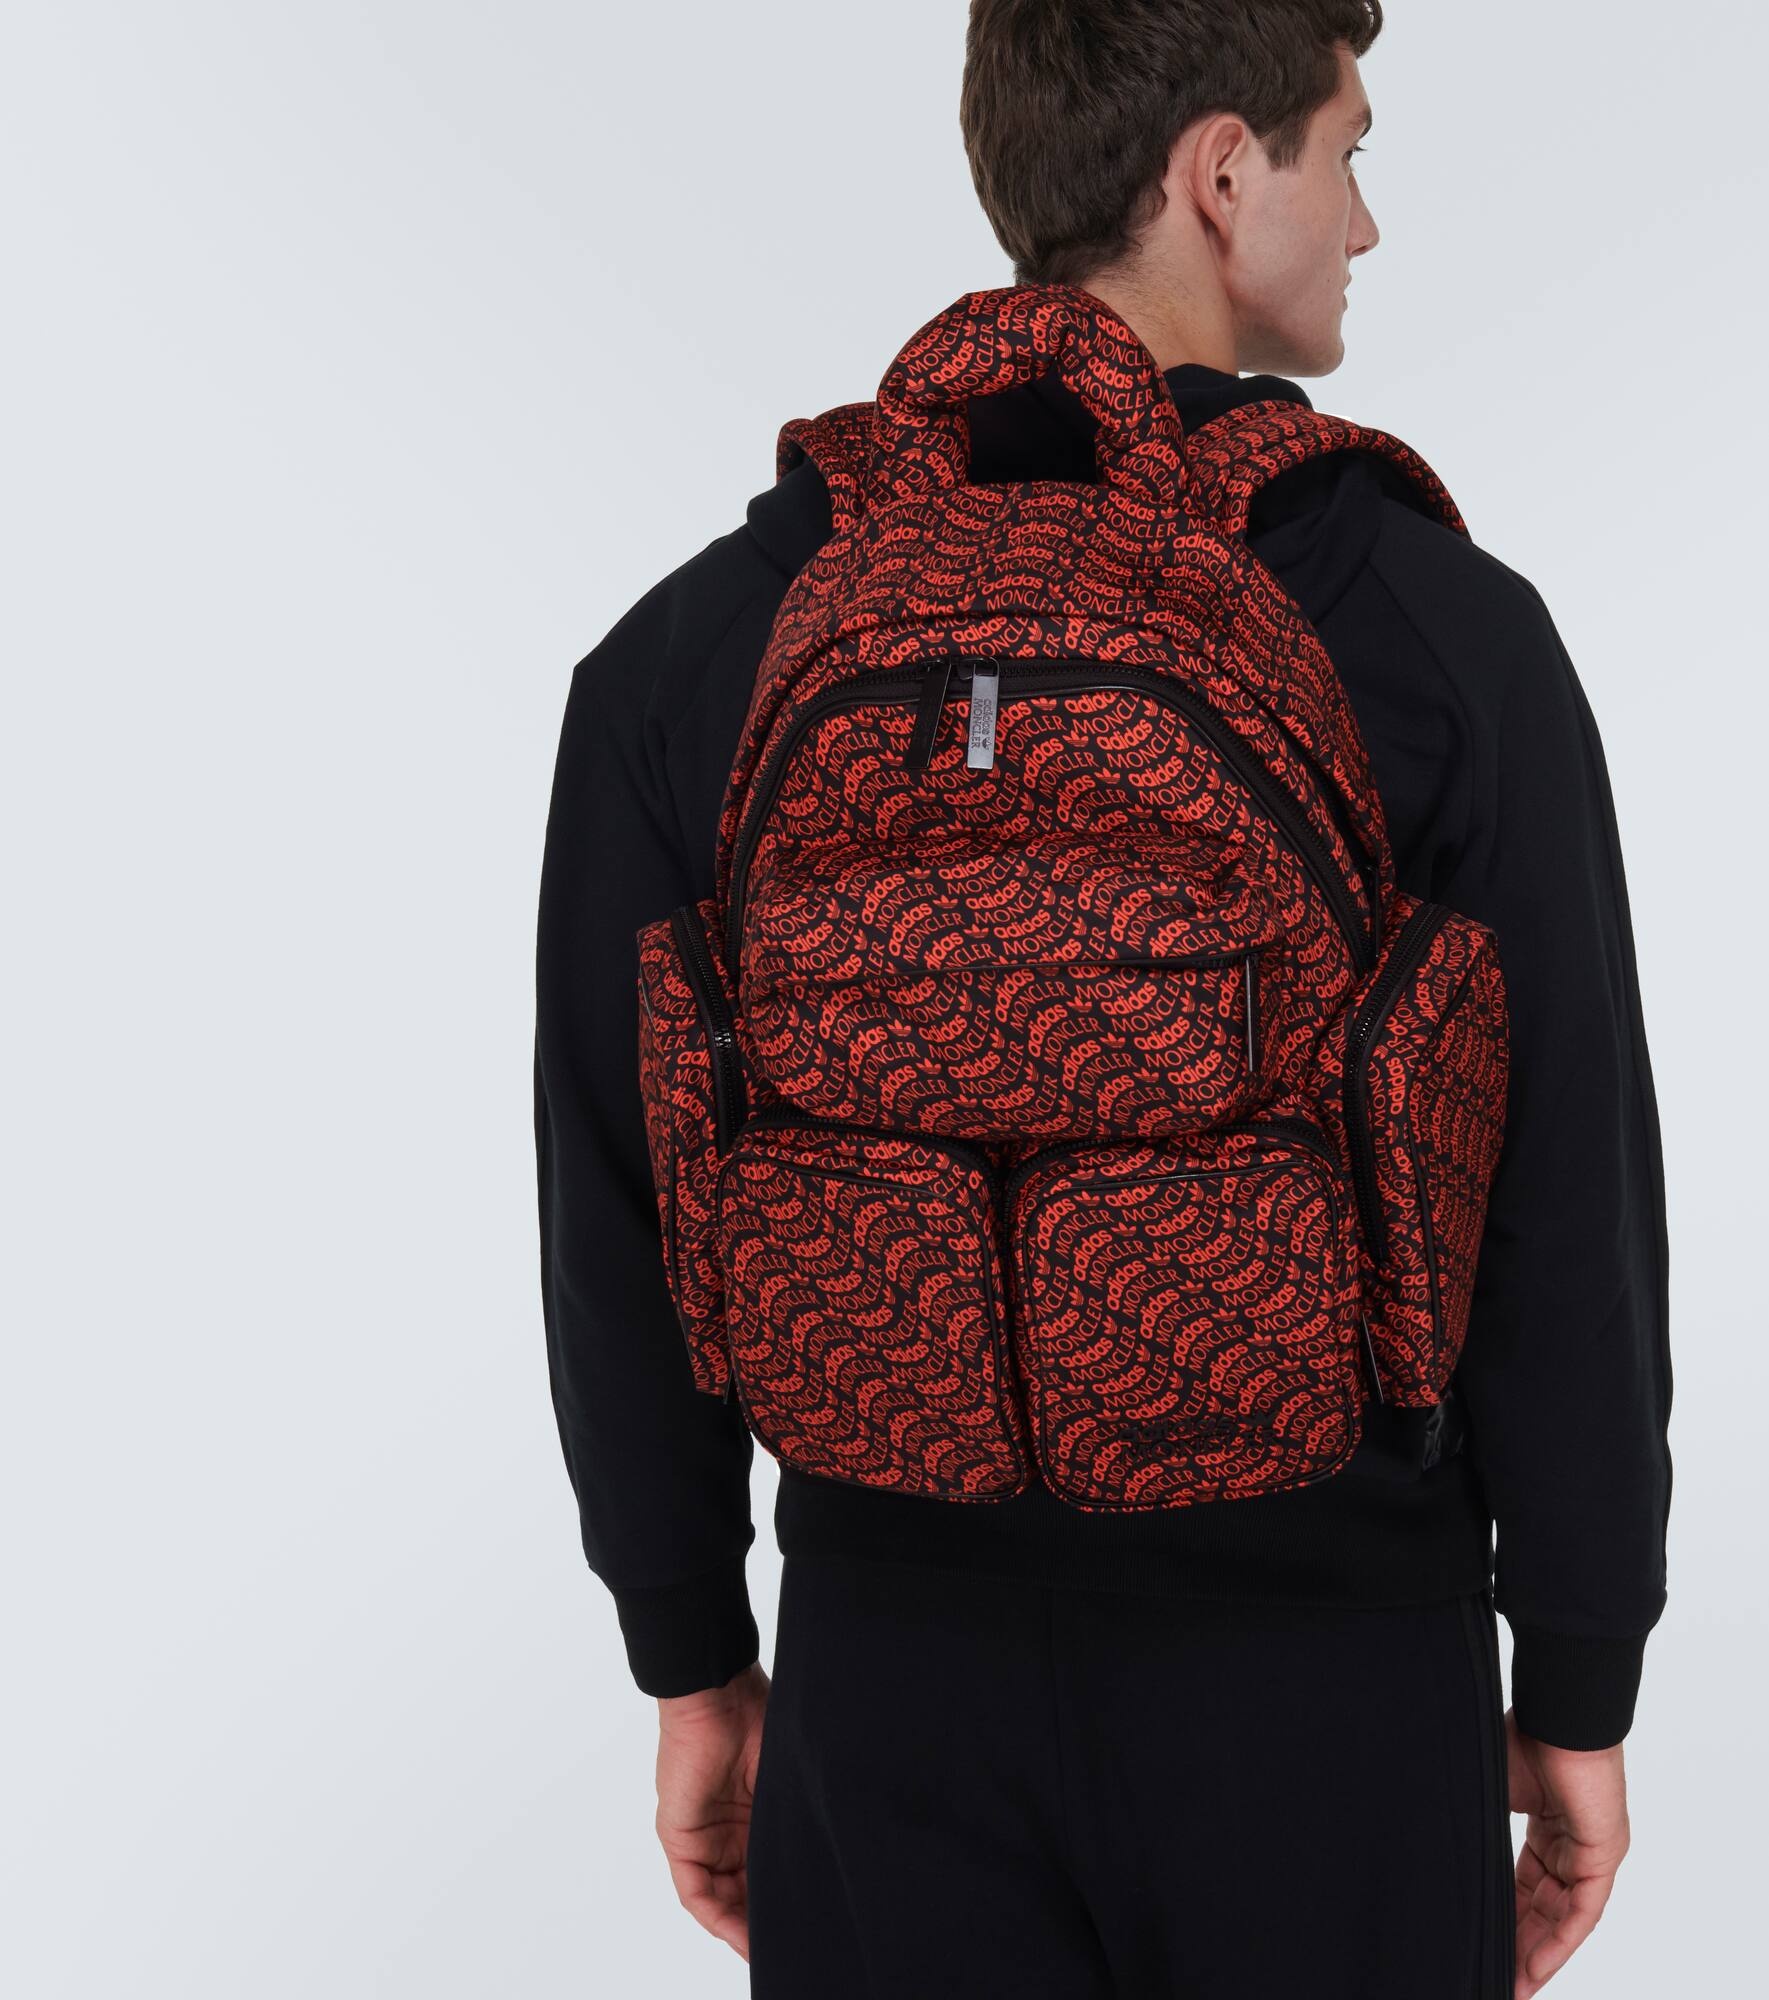 x Adidas printed backpack - 3